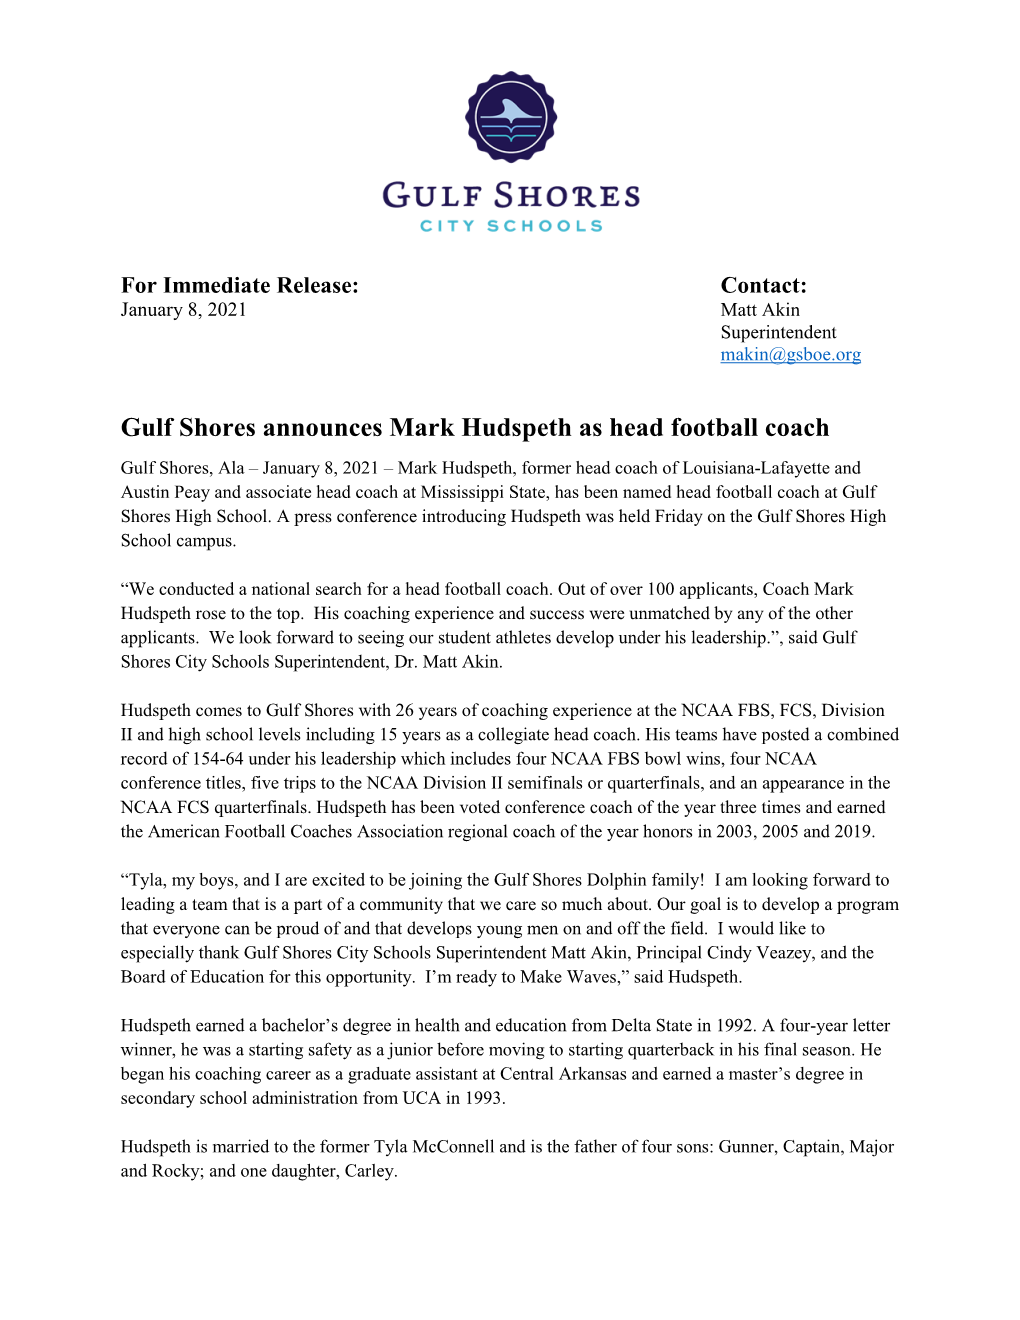 Gulf Shores Announces Mark Hudspeth As Head Football Coach